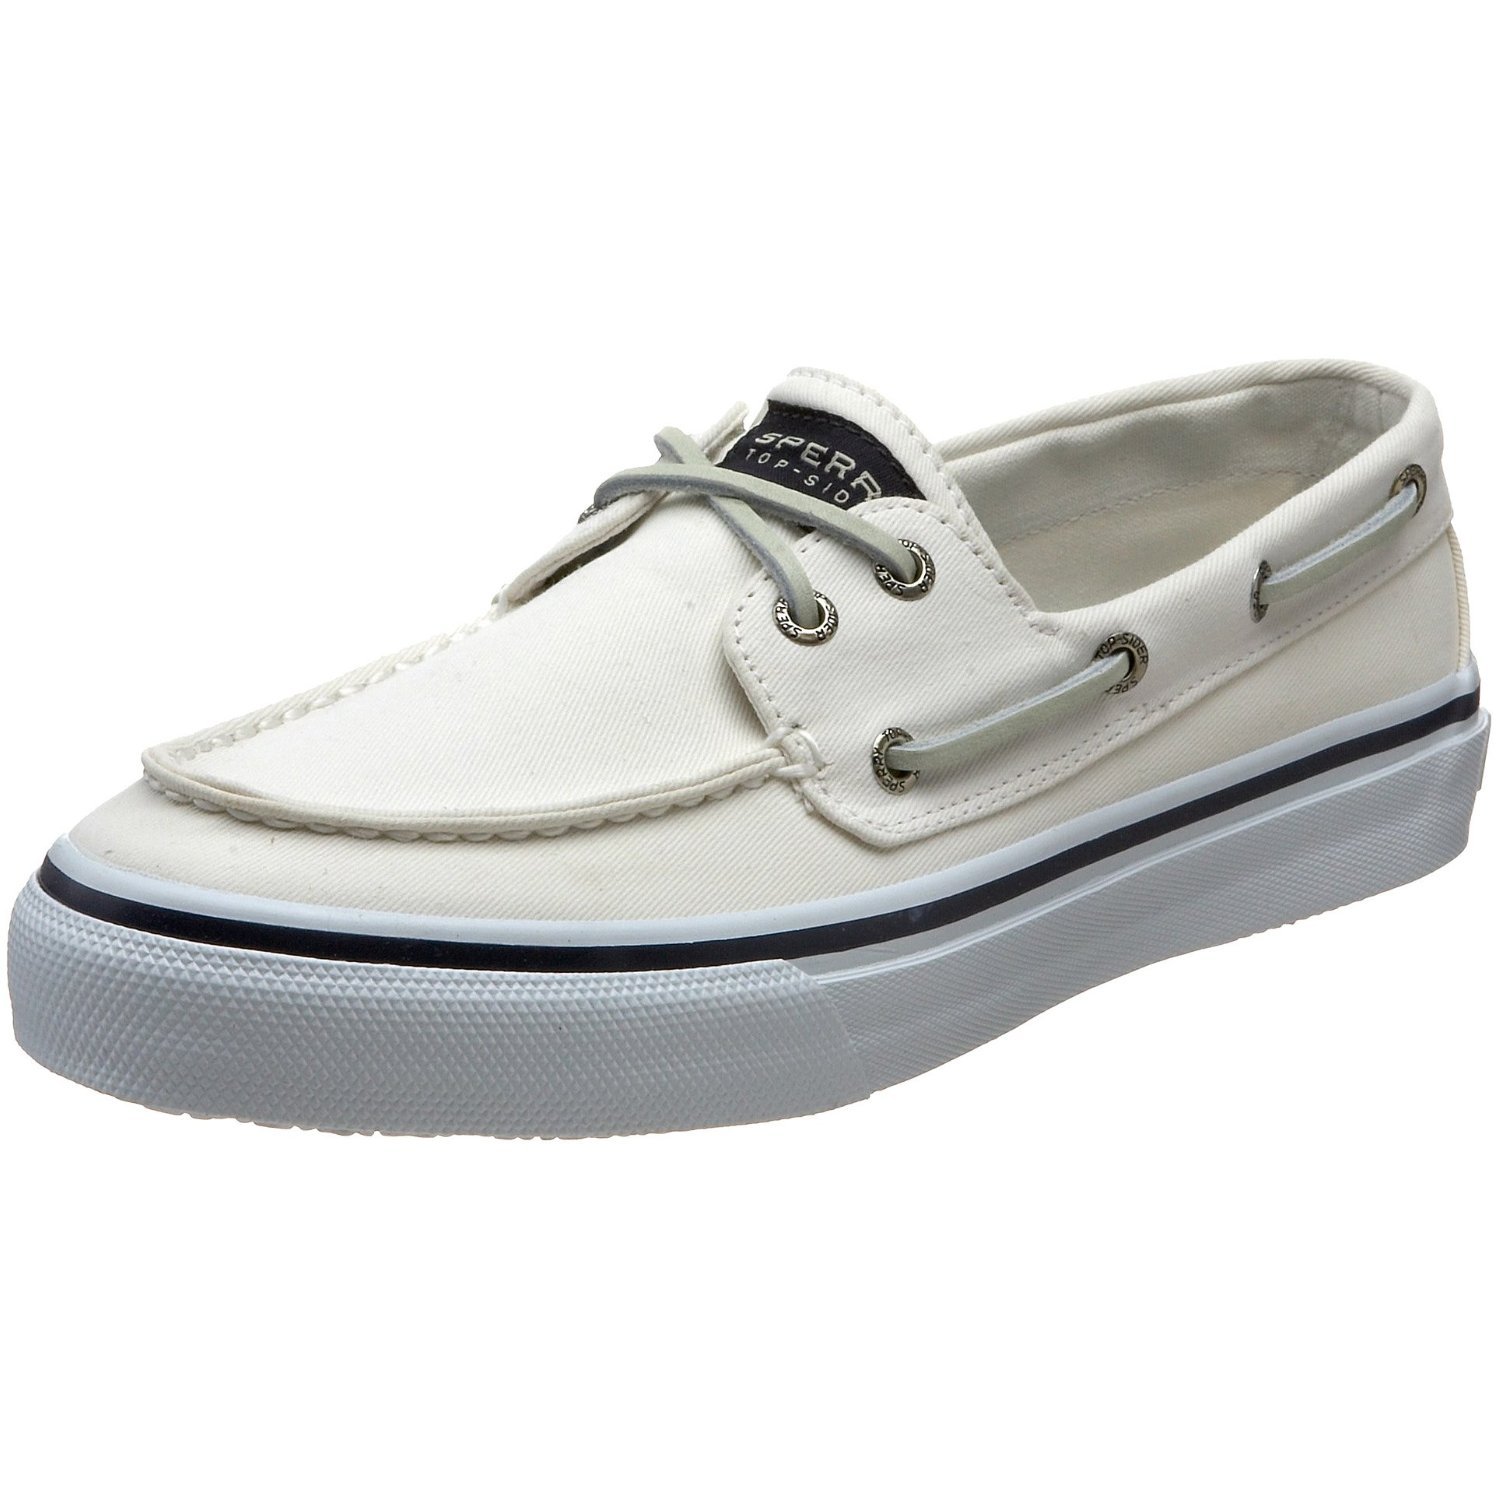 Sperry Topsider Bahama 2eye Boat Shoe in White for Men Lyst